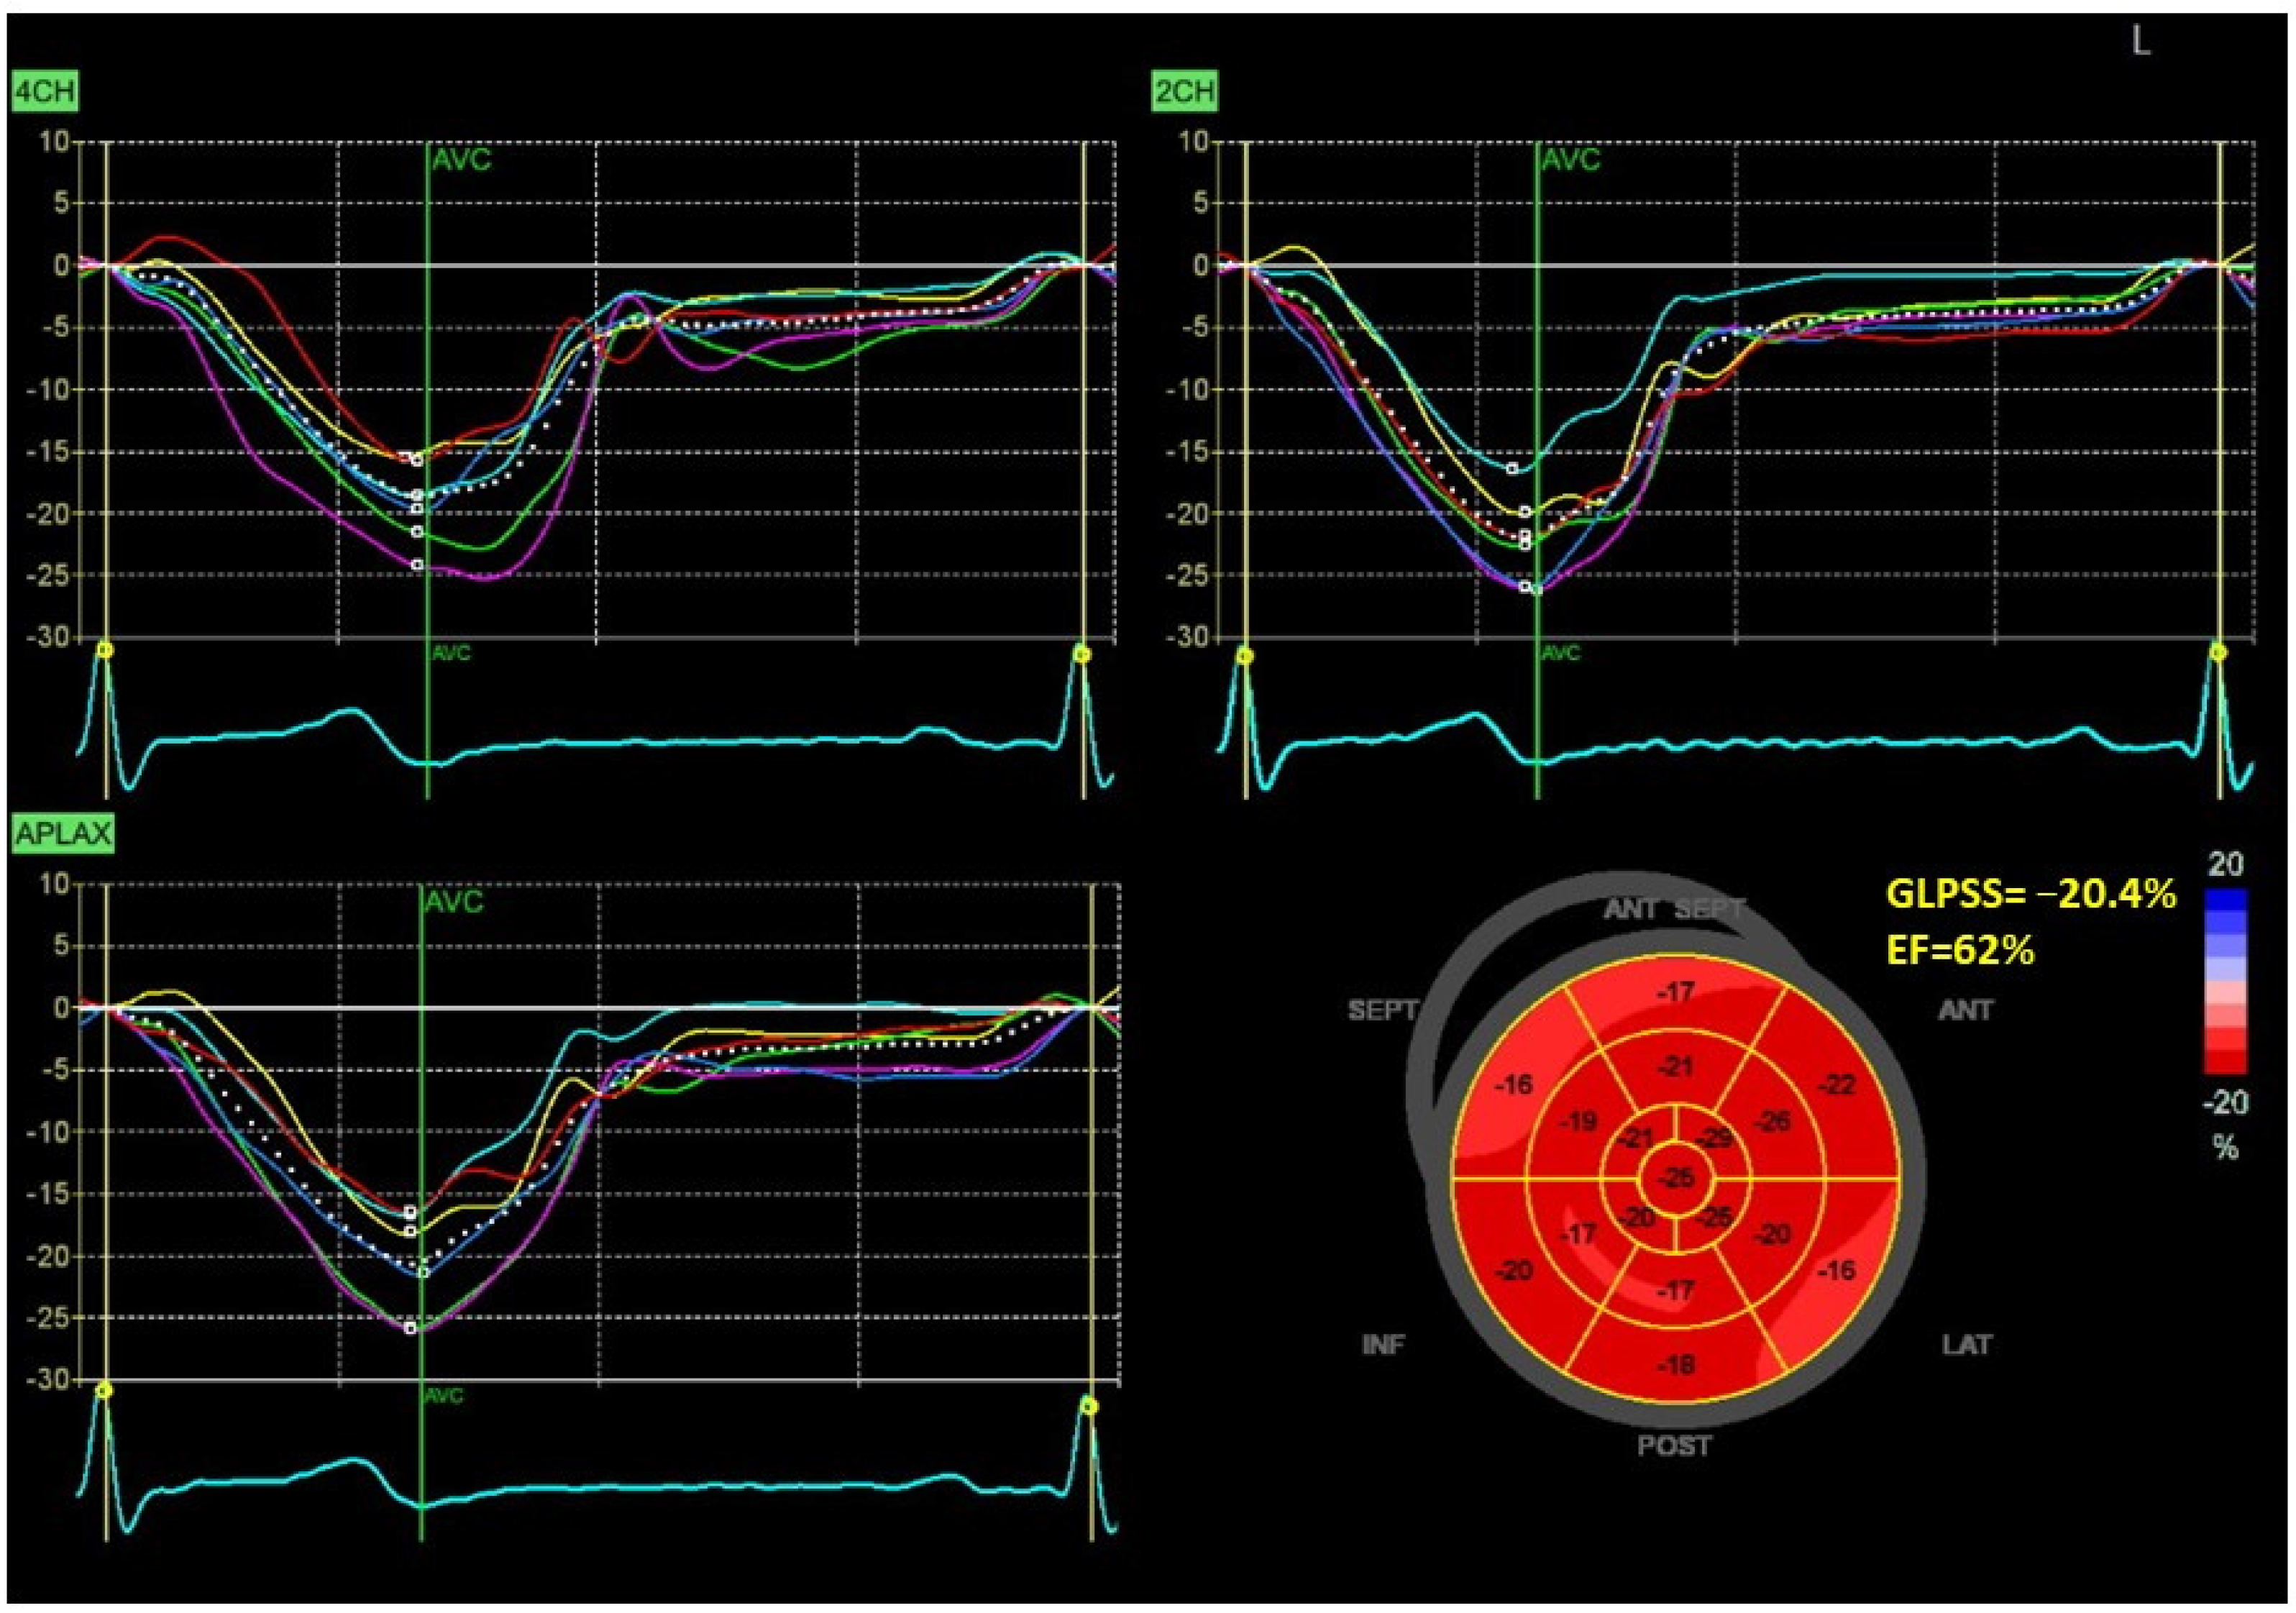 Value of peak strain dispersion in discovering left ventricular dysfunction  in diabetes mellitus